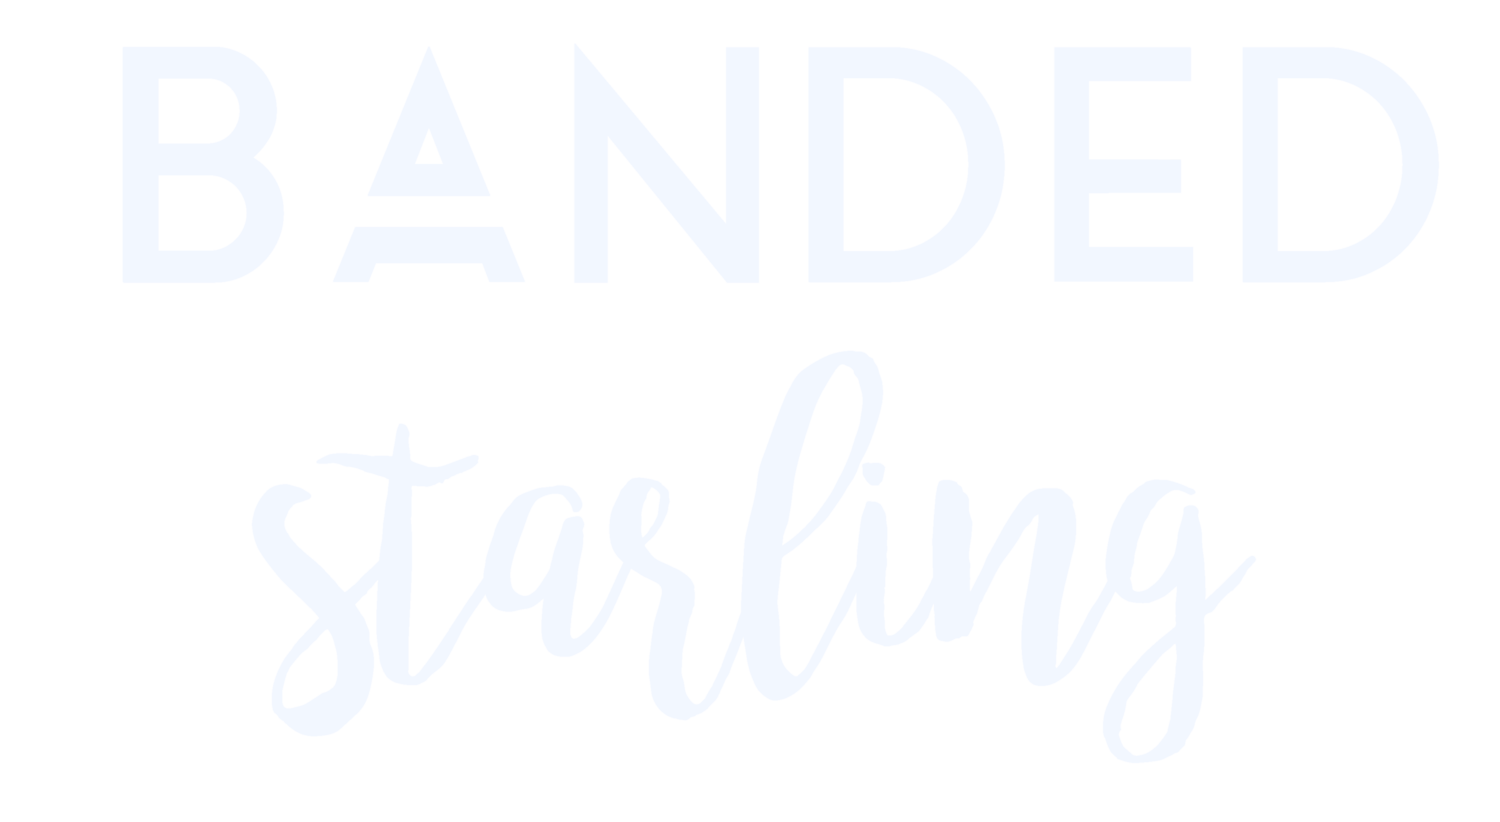 Banded Starling